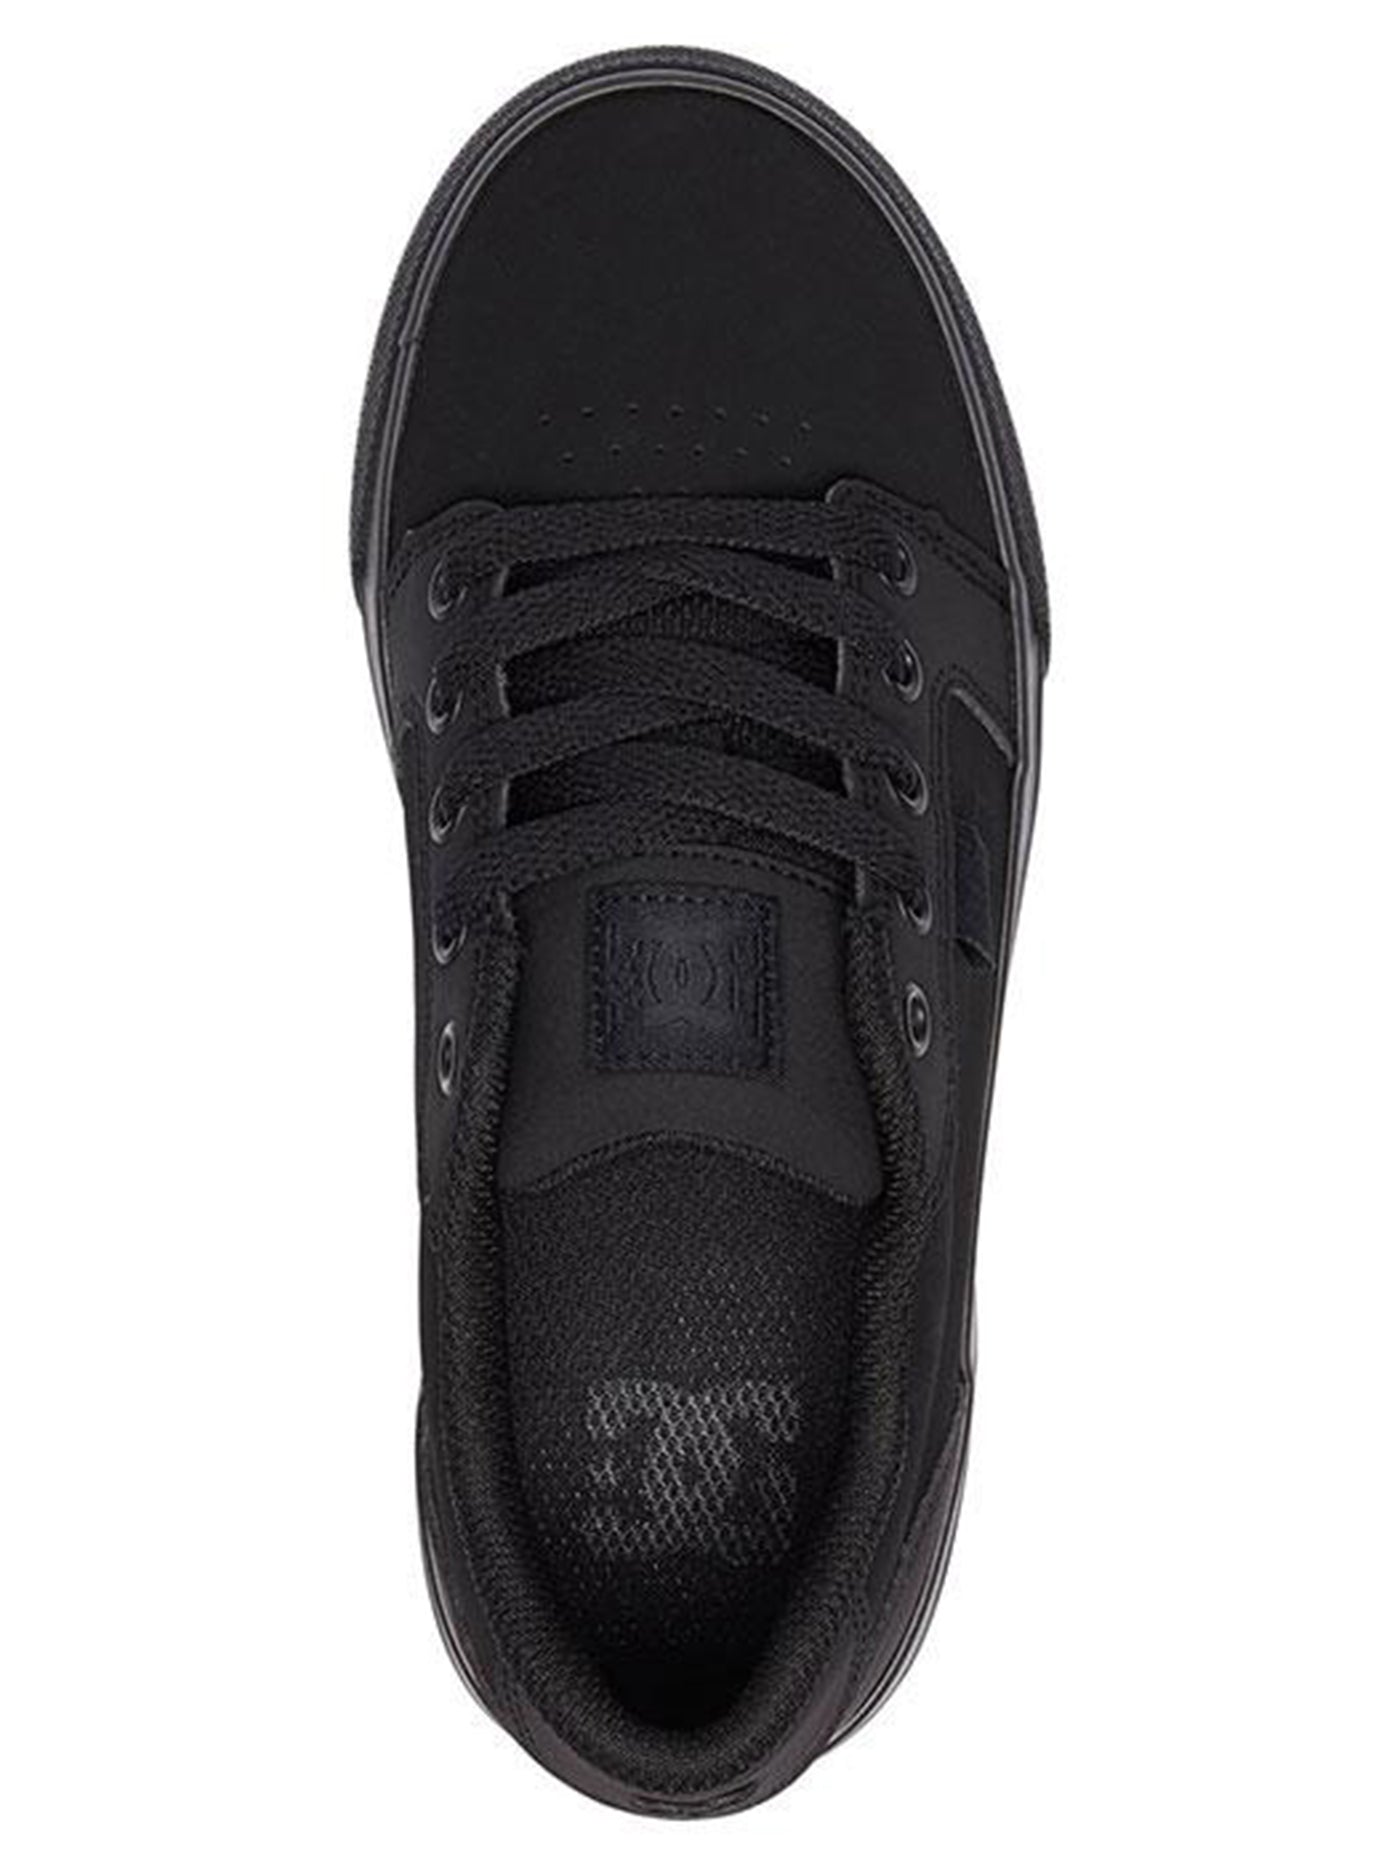 DC Anvil Black/Pirate Black Shoes